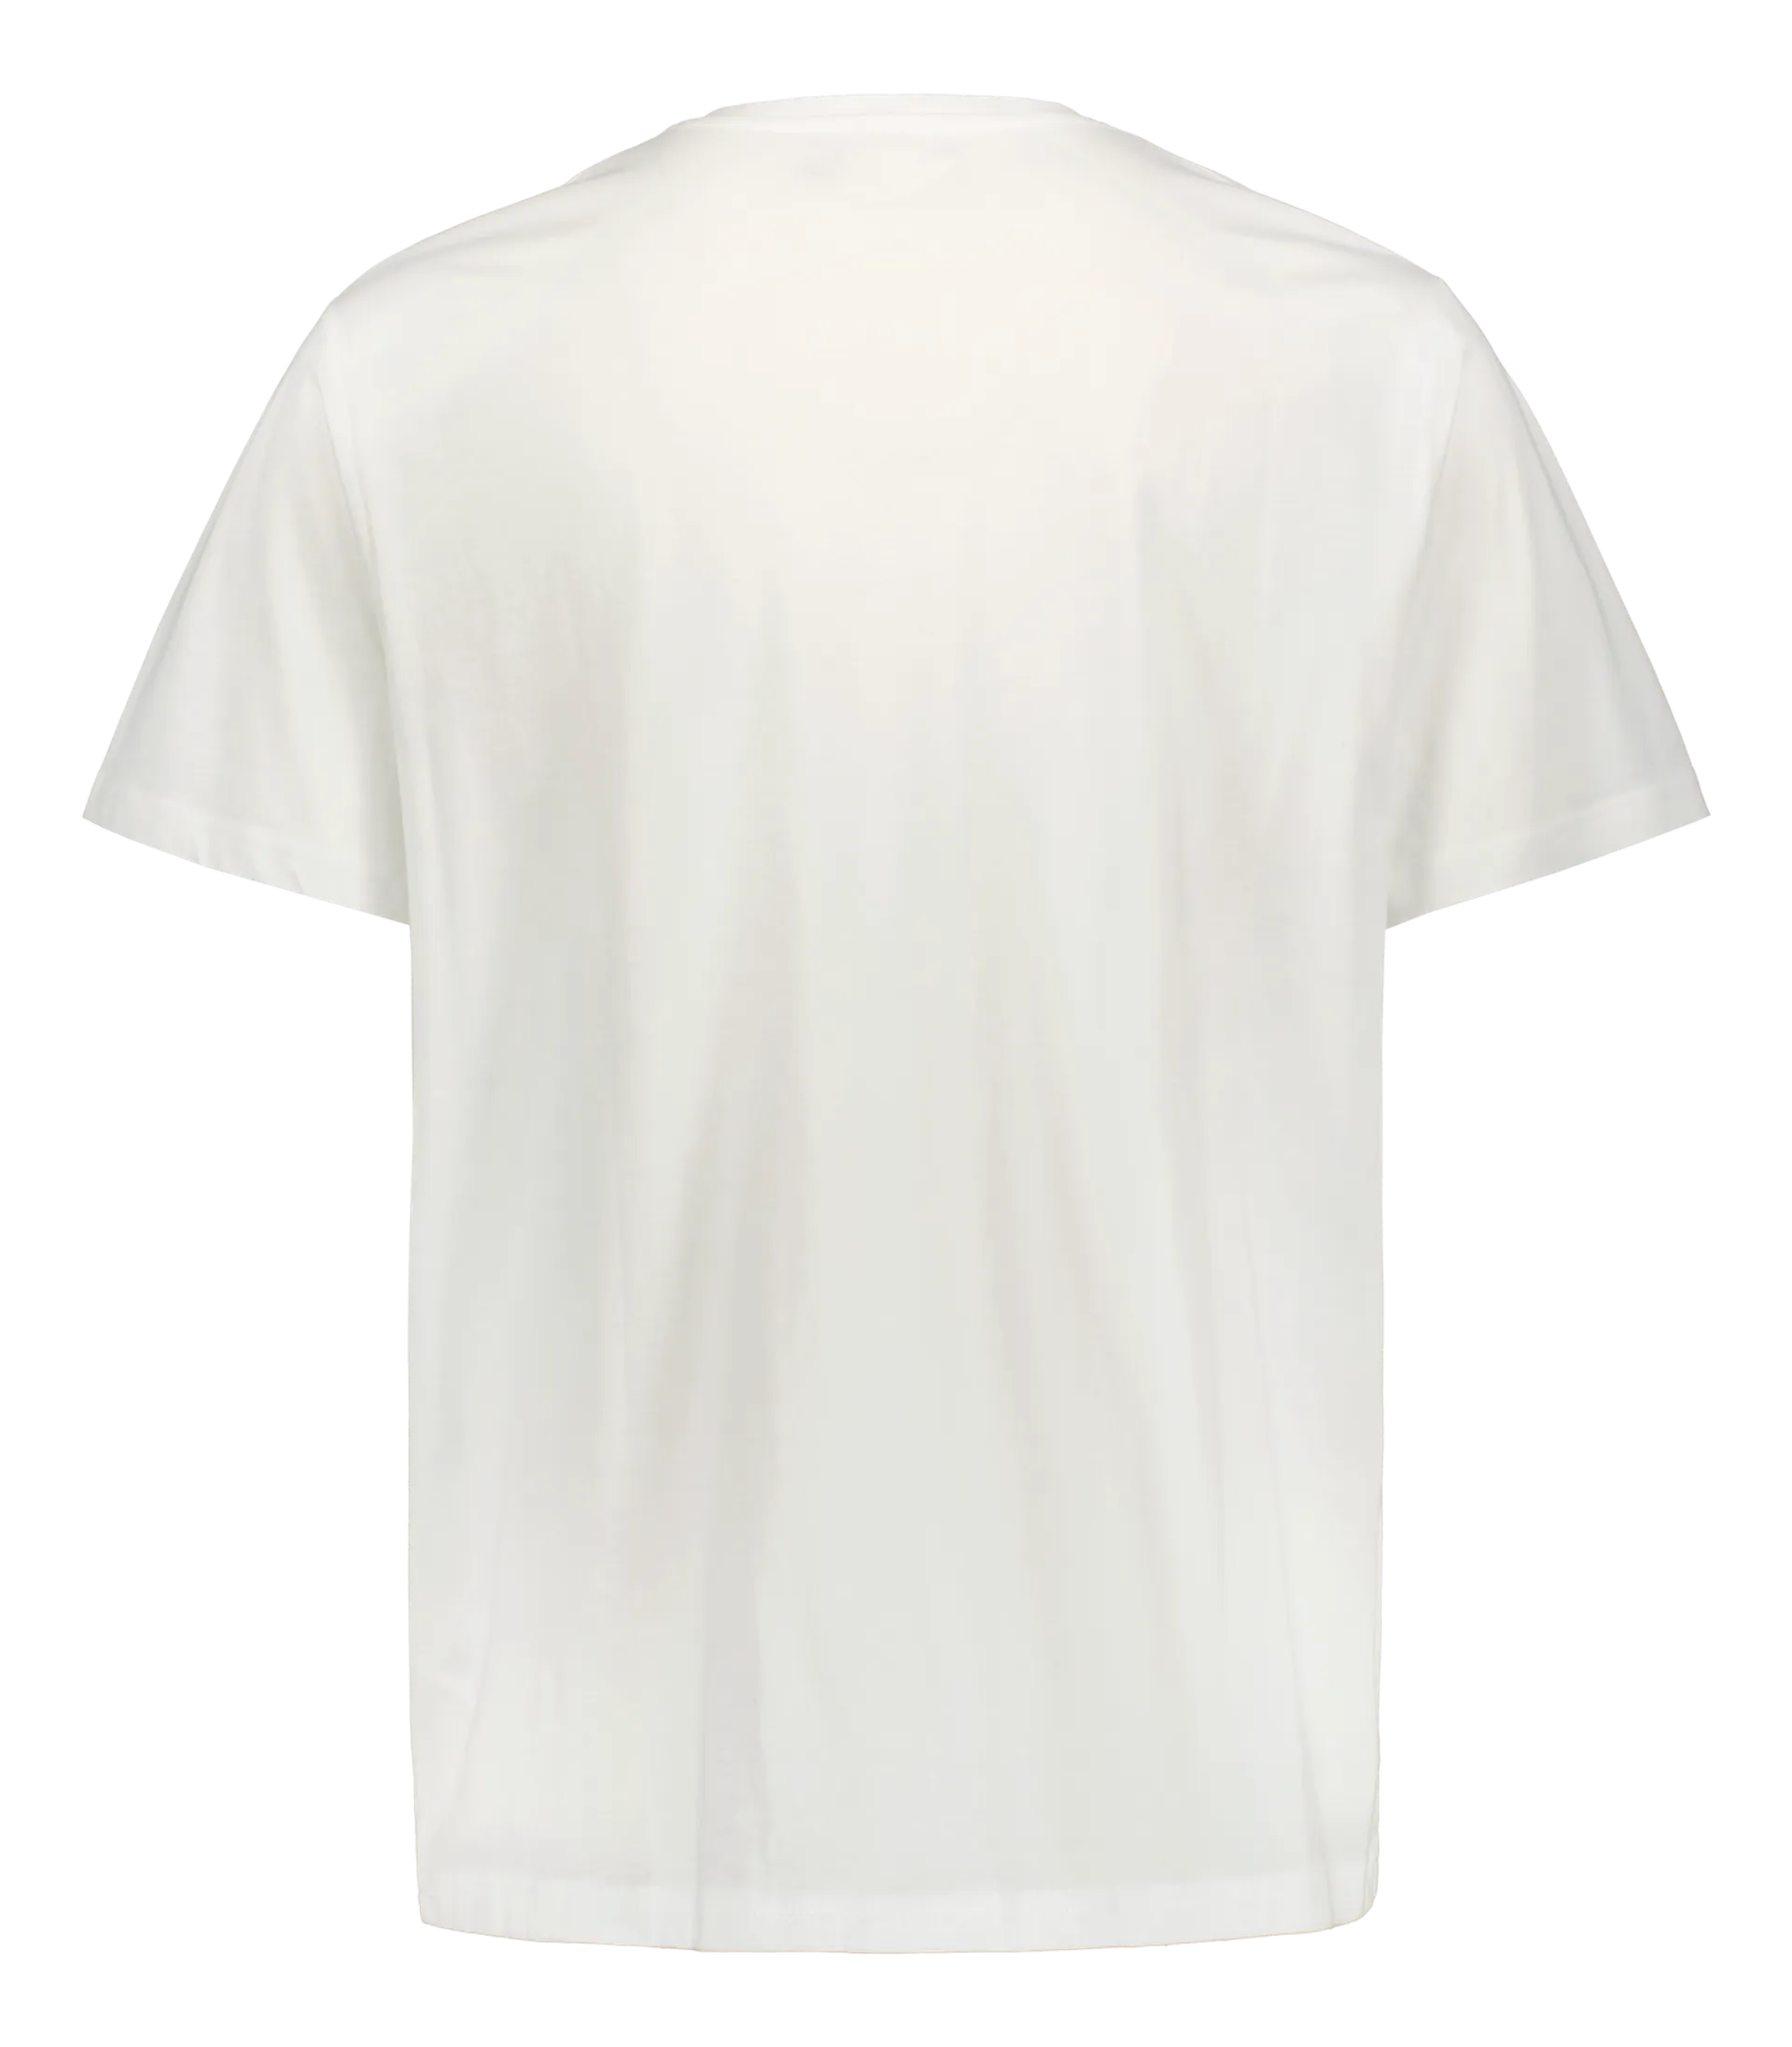 London Fog miesten t-paita 195LF052001 - Bright white - 2